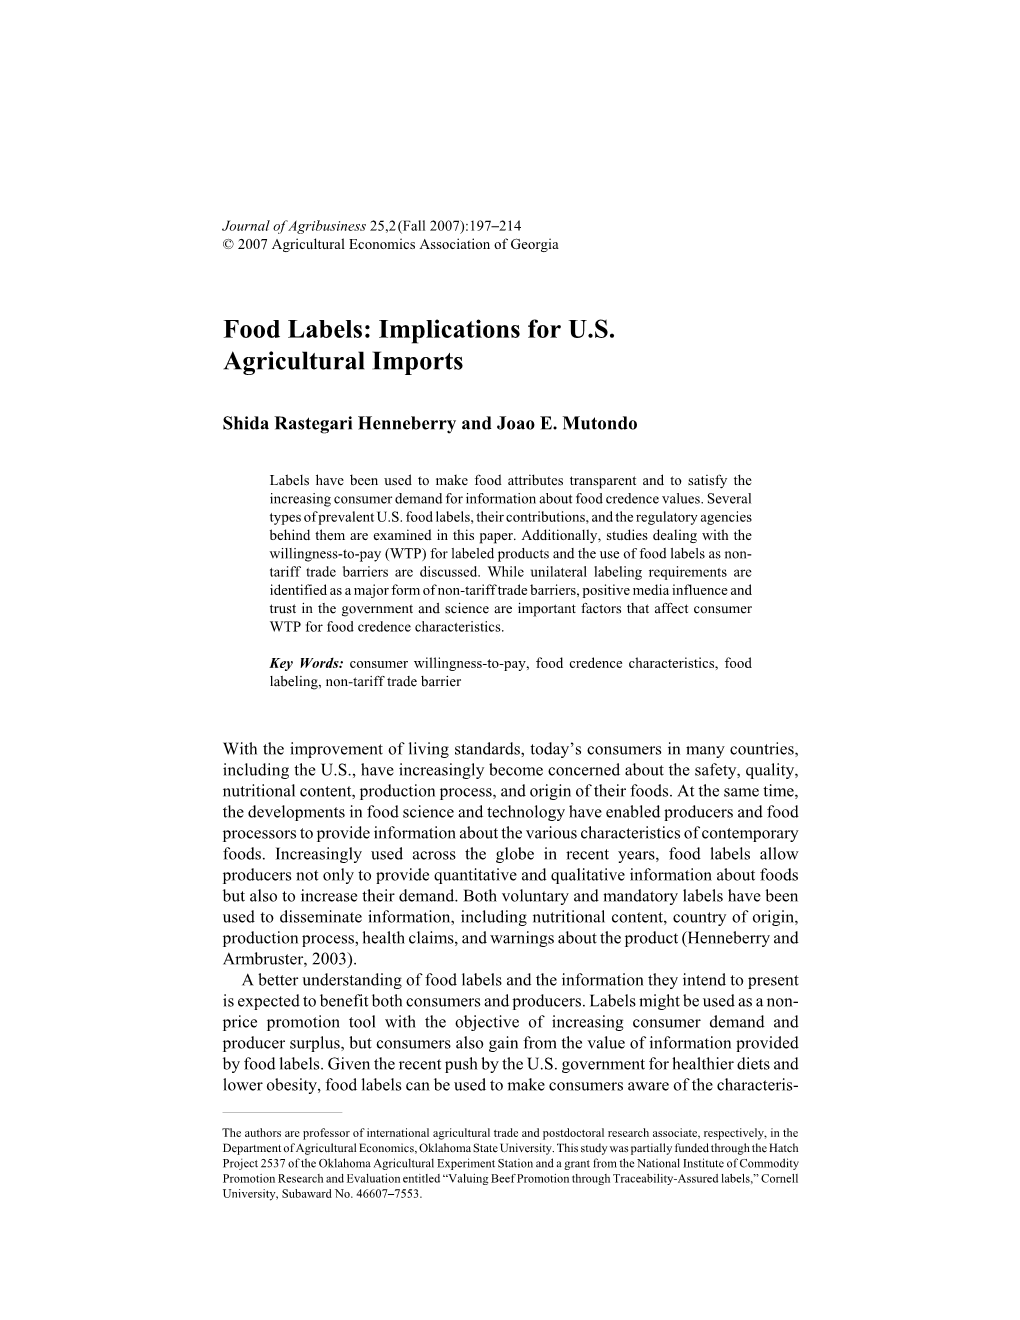 Food Labels: Implications for U.S